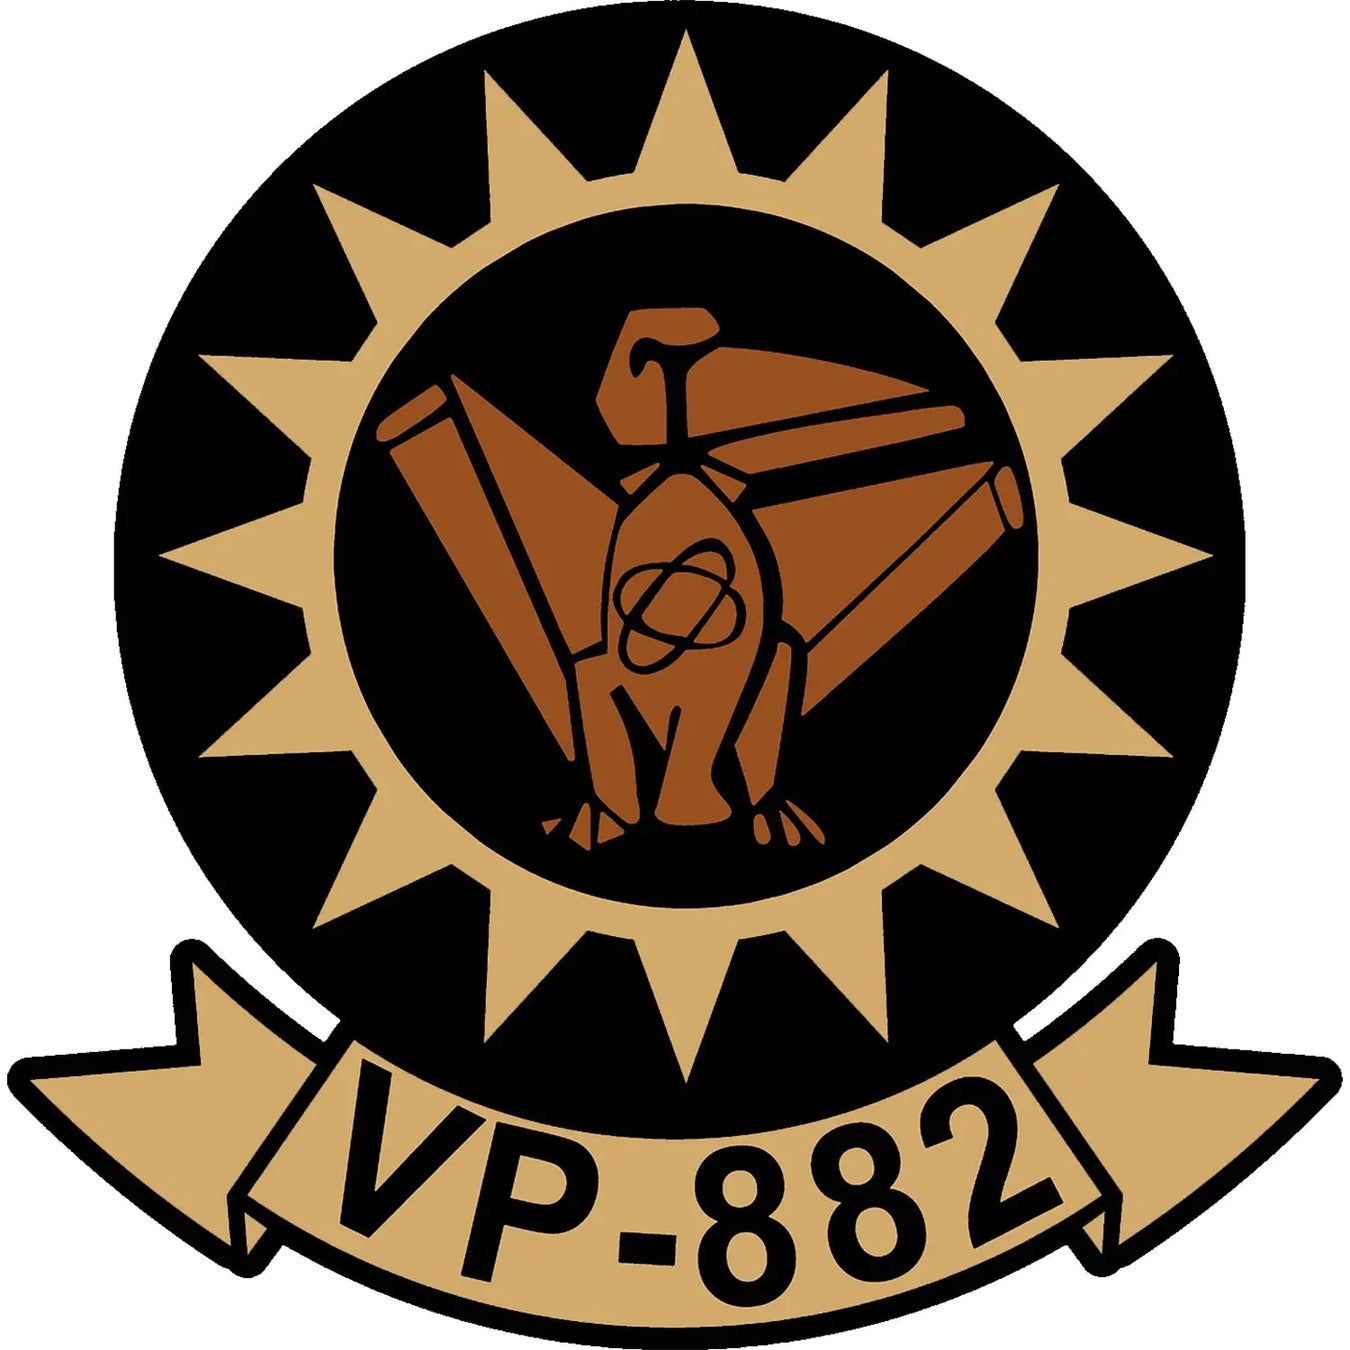 Patrol Squadron 882 (VP-882)